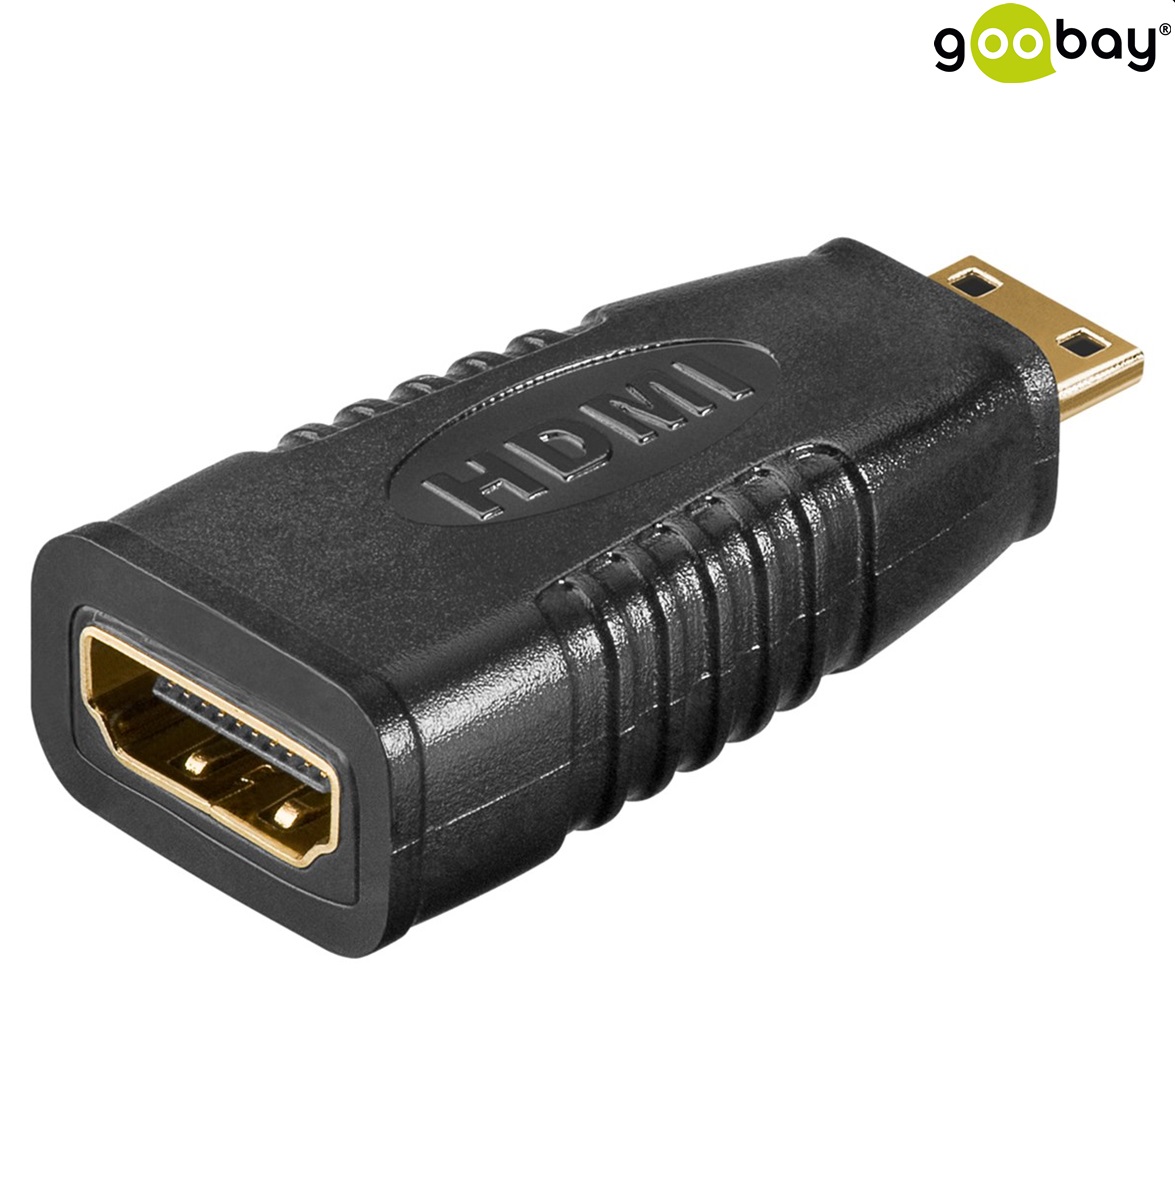 HDMI-F to mini HDMI-M Adapter GOOBAY 68841